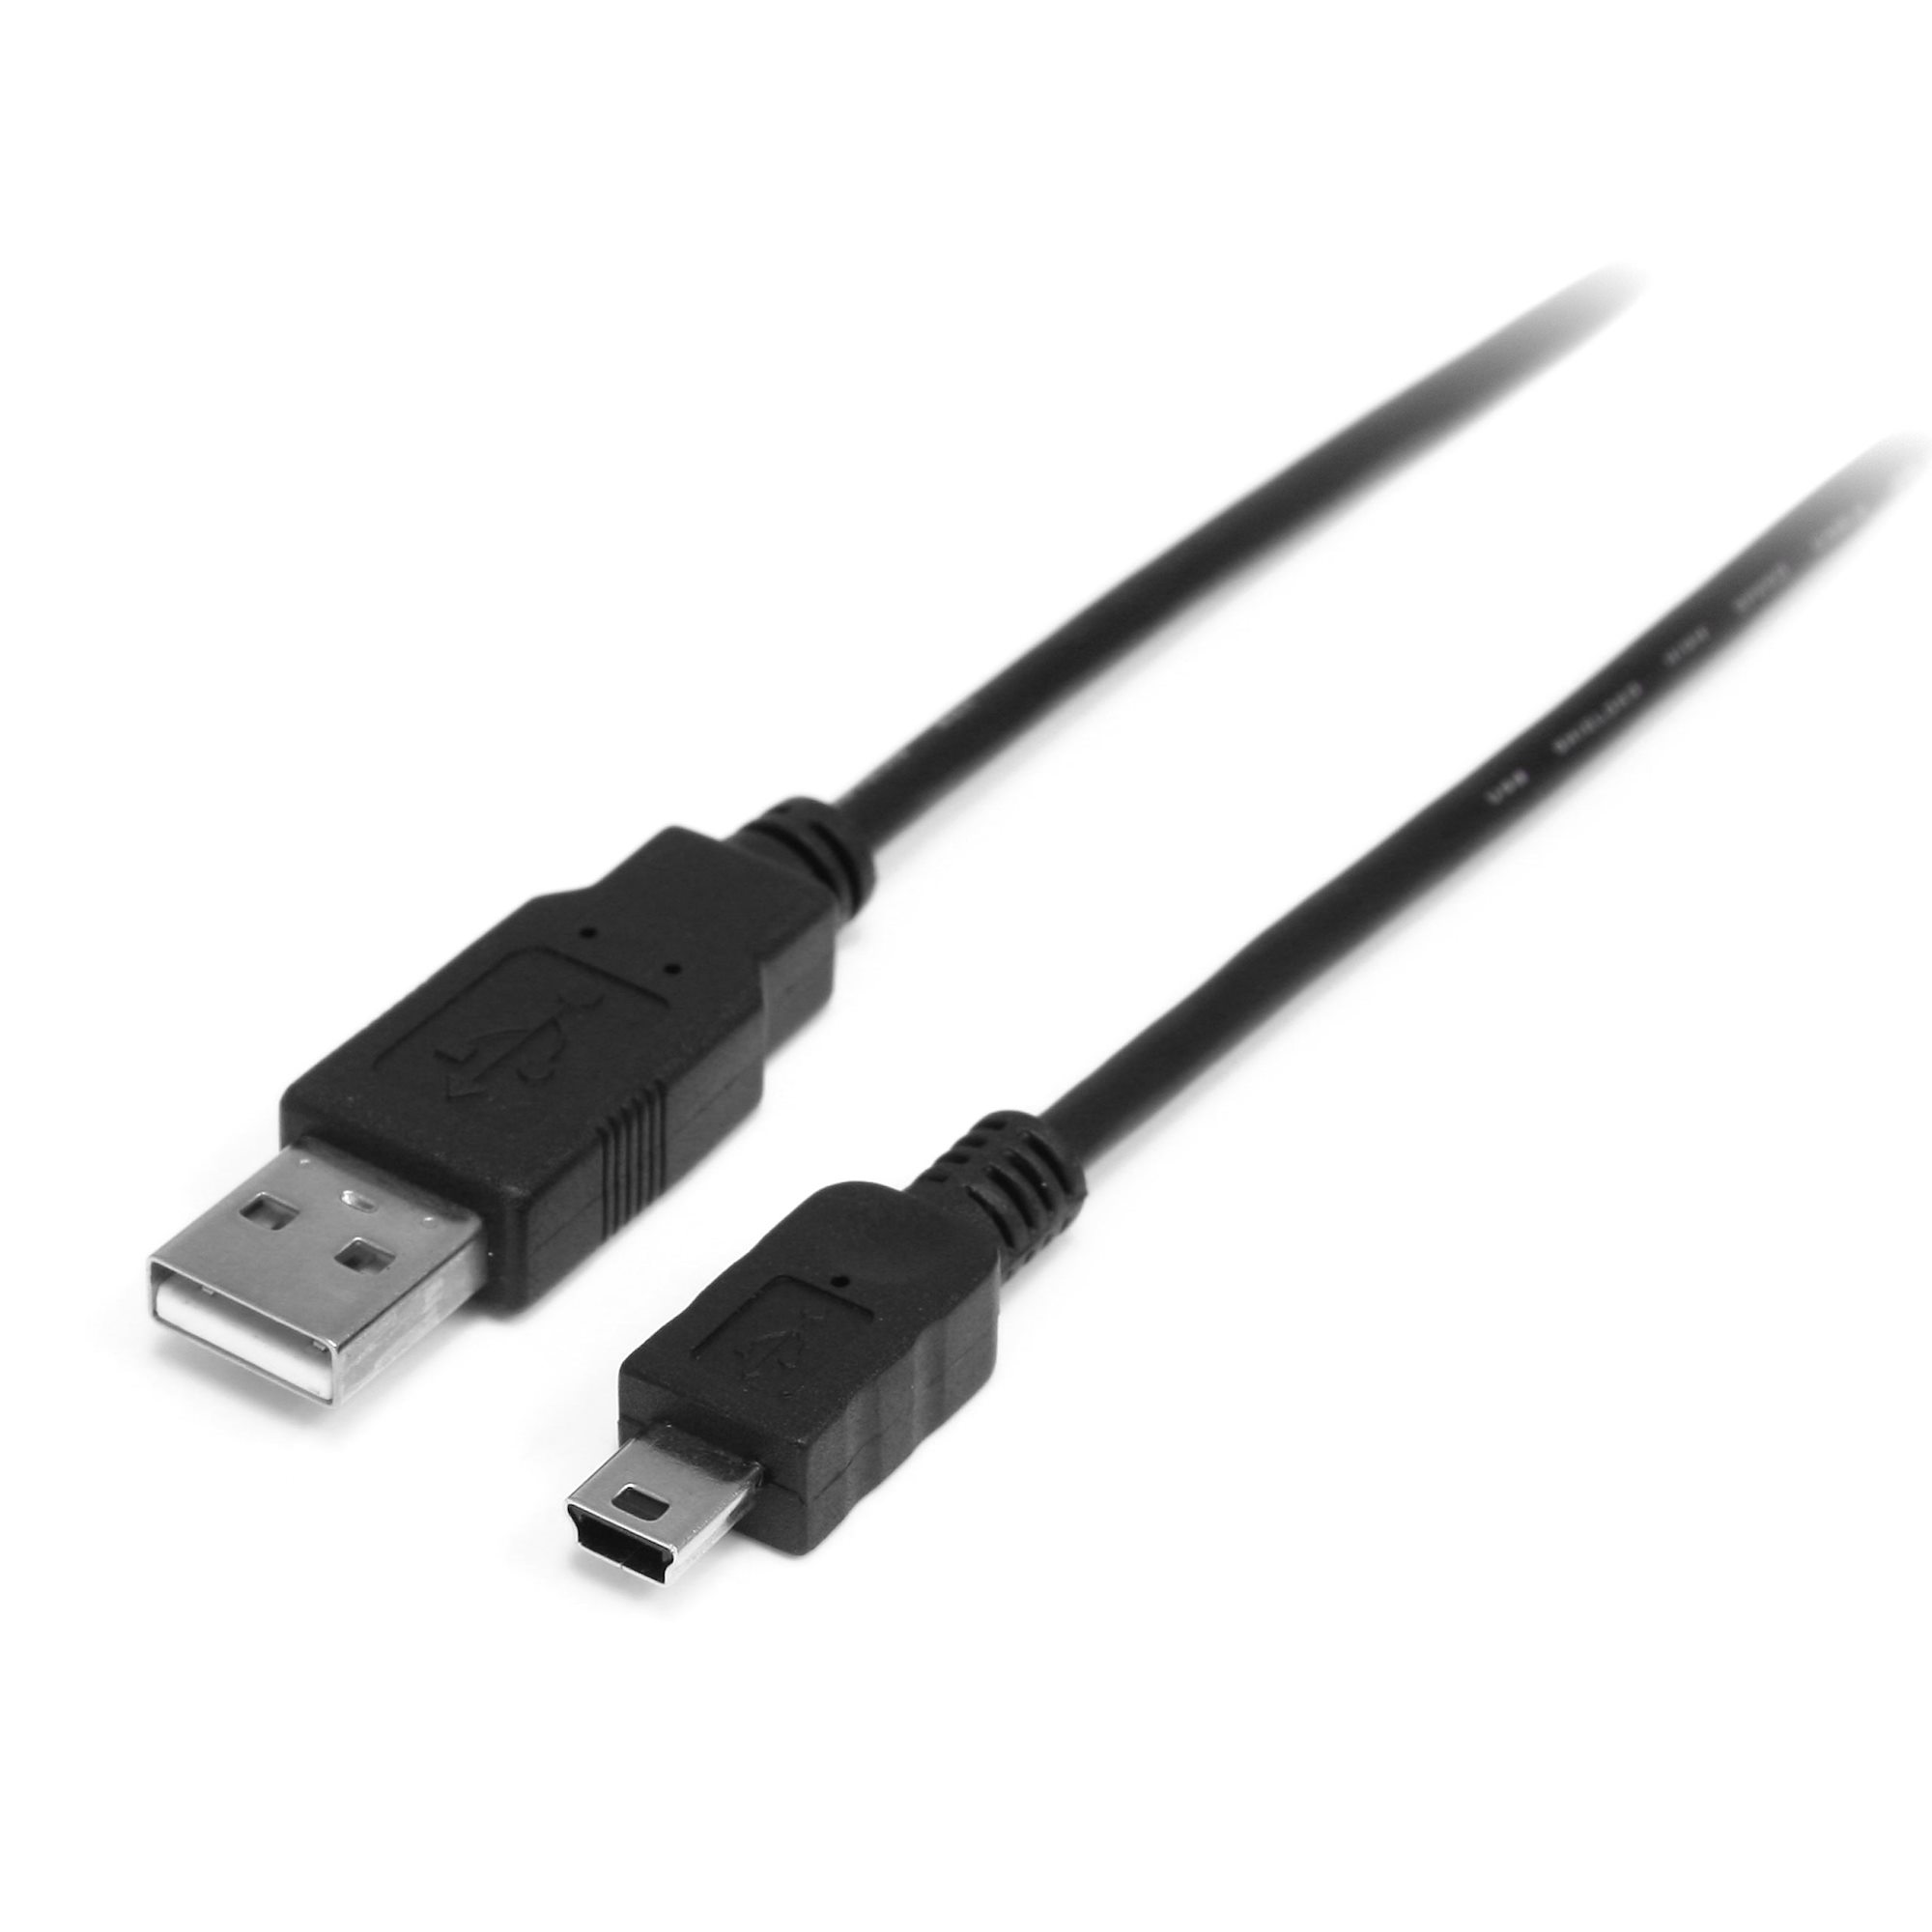 huren Peer geluk 0.5m Mini USB 2.0 Cable - A to Mini B - Mini USB Cables & Adapters |  StarTech.com Colombia (en)